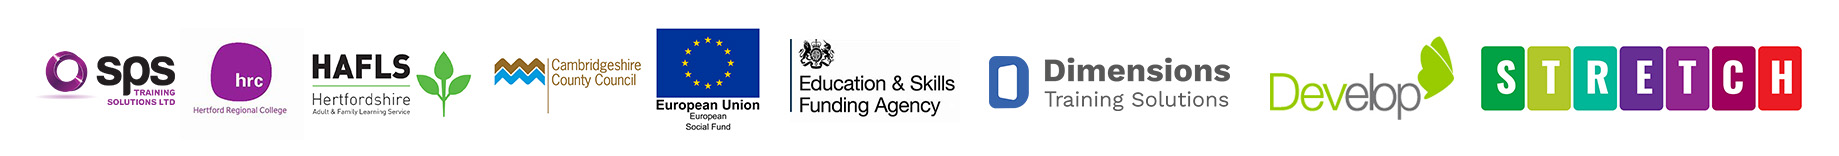 SPS Training Solutions Ltd logo